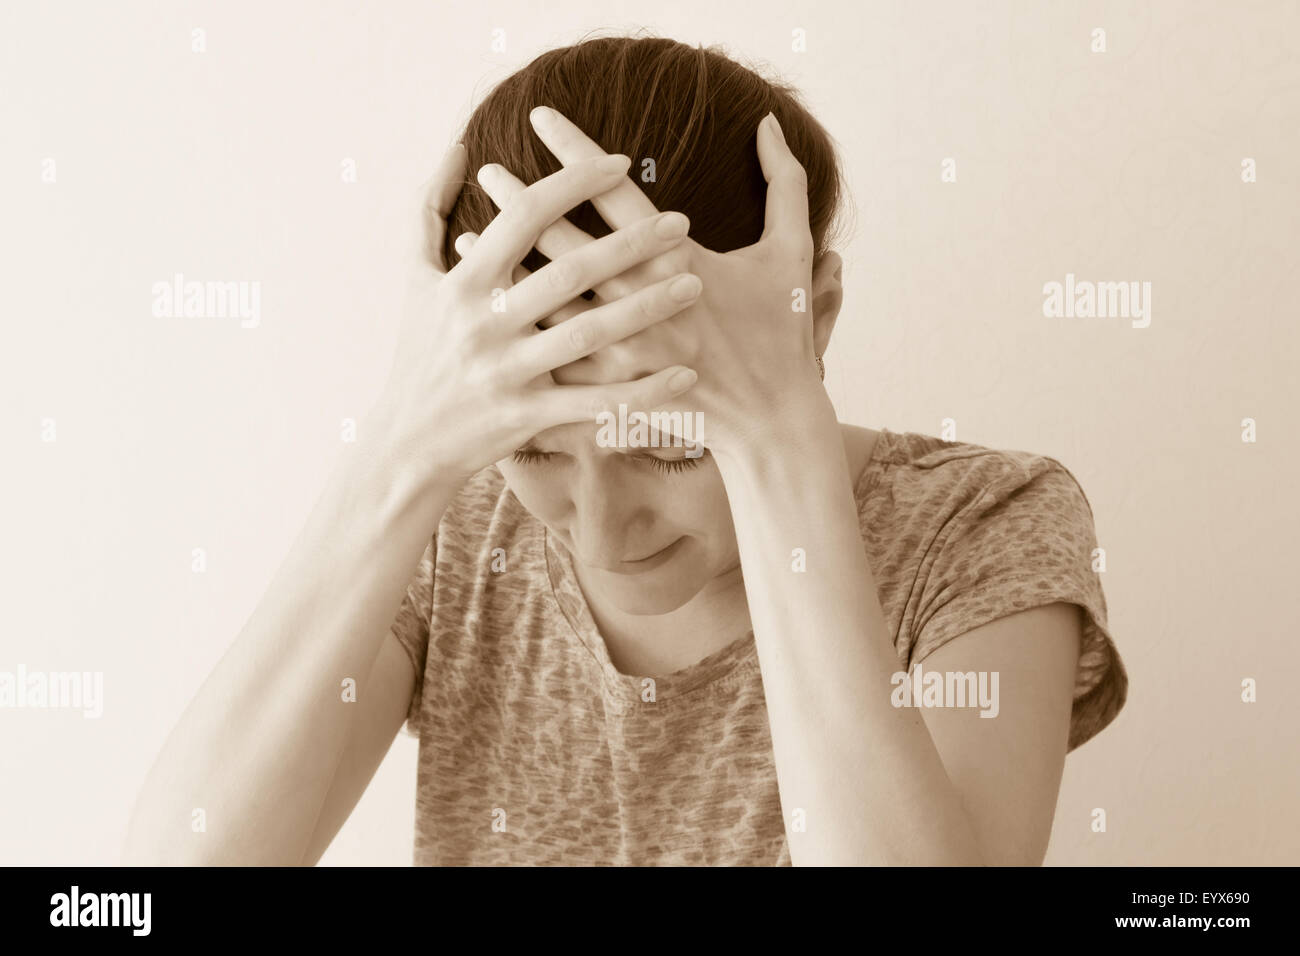 Crying depressed sad young woman, dramatic portrait Stock Photo